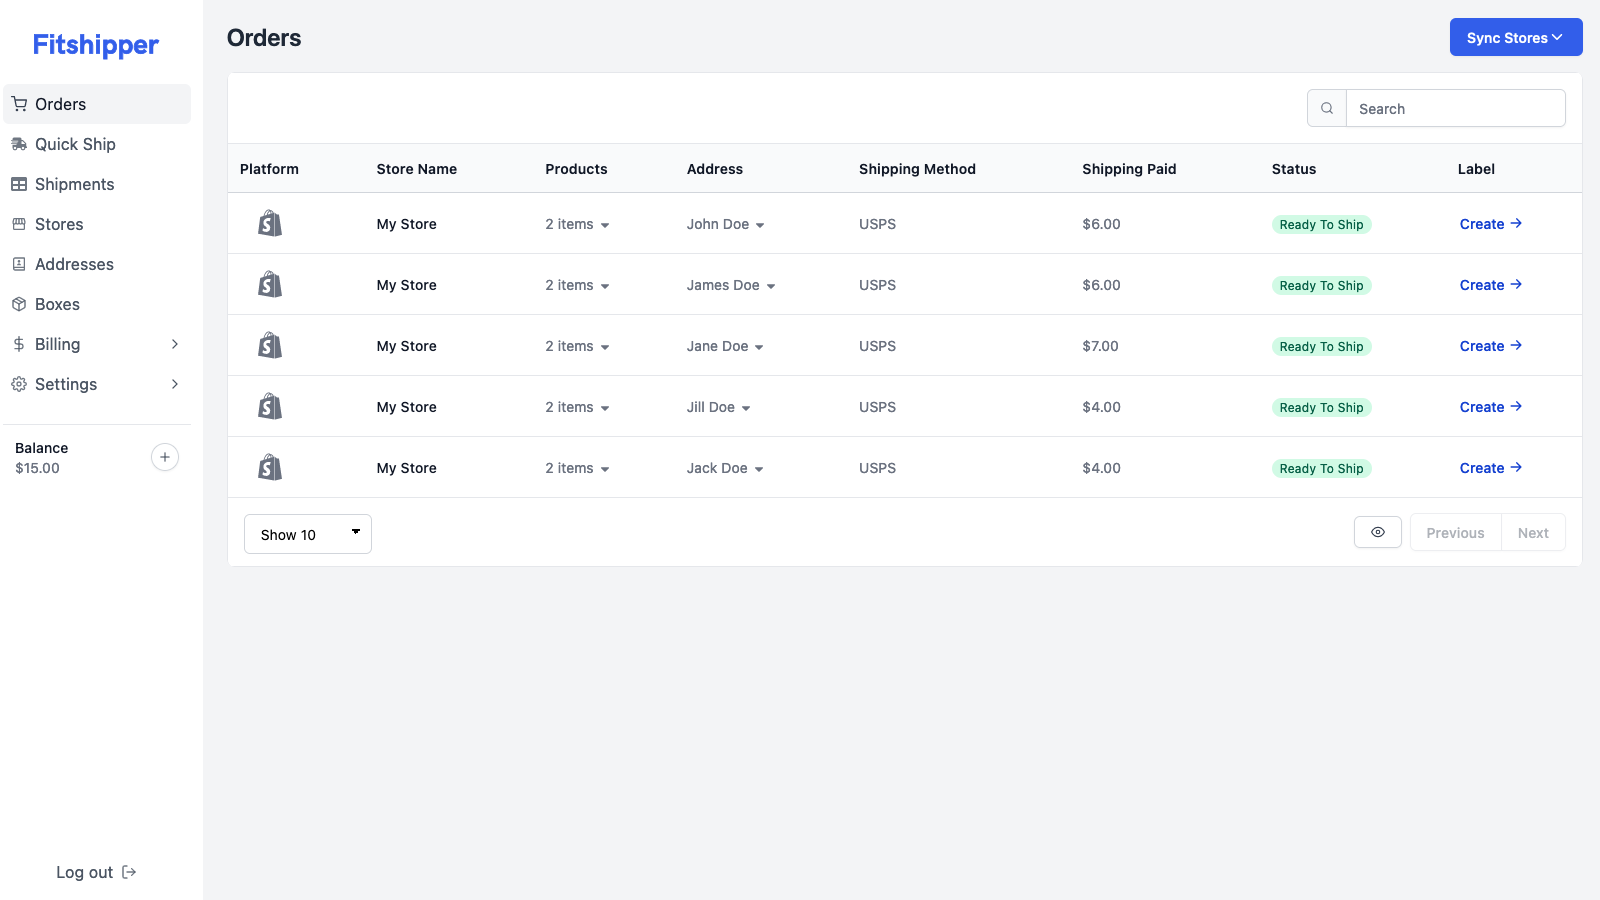 Orders screen in Fitshipper showing multiple Shopify orders